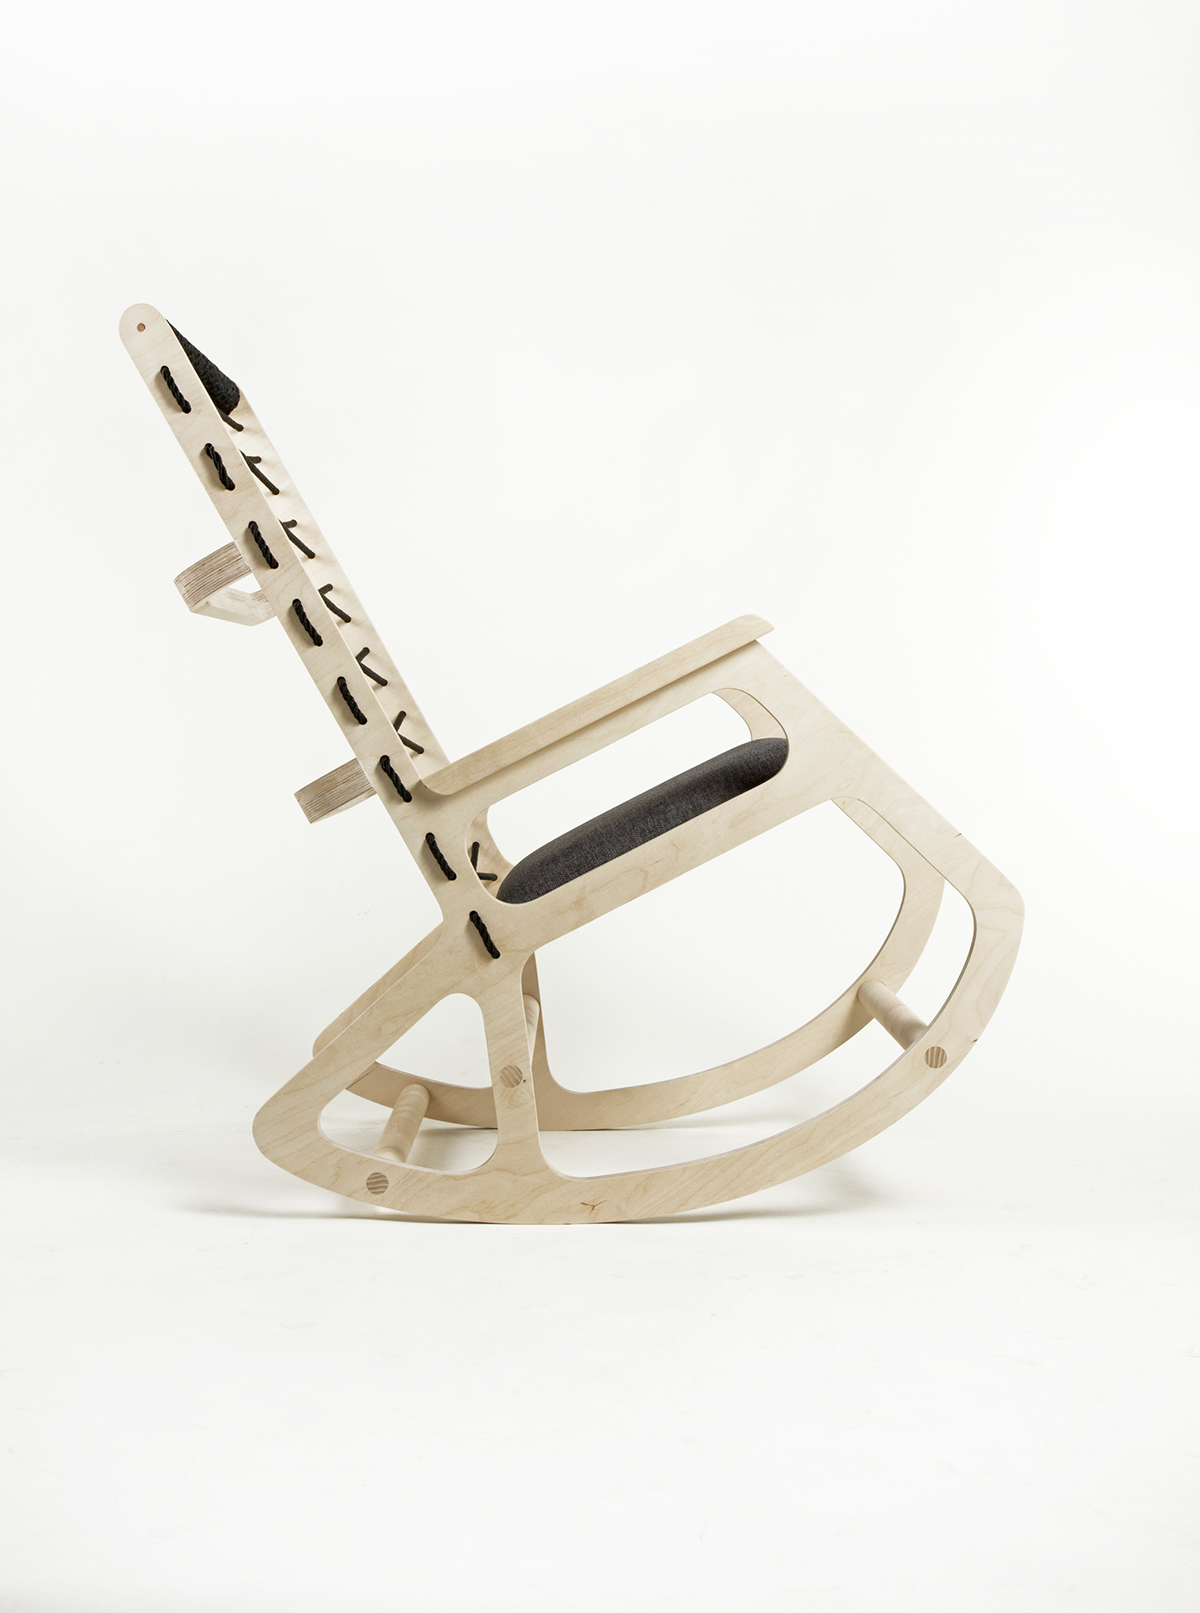 Rocker rocking-chair rocking chair design wood plywood birch-tree ASP Kwiatkowska klaudia furniture